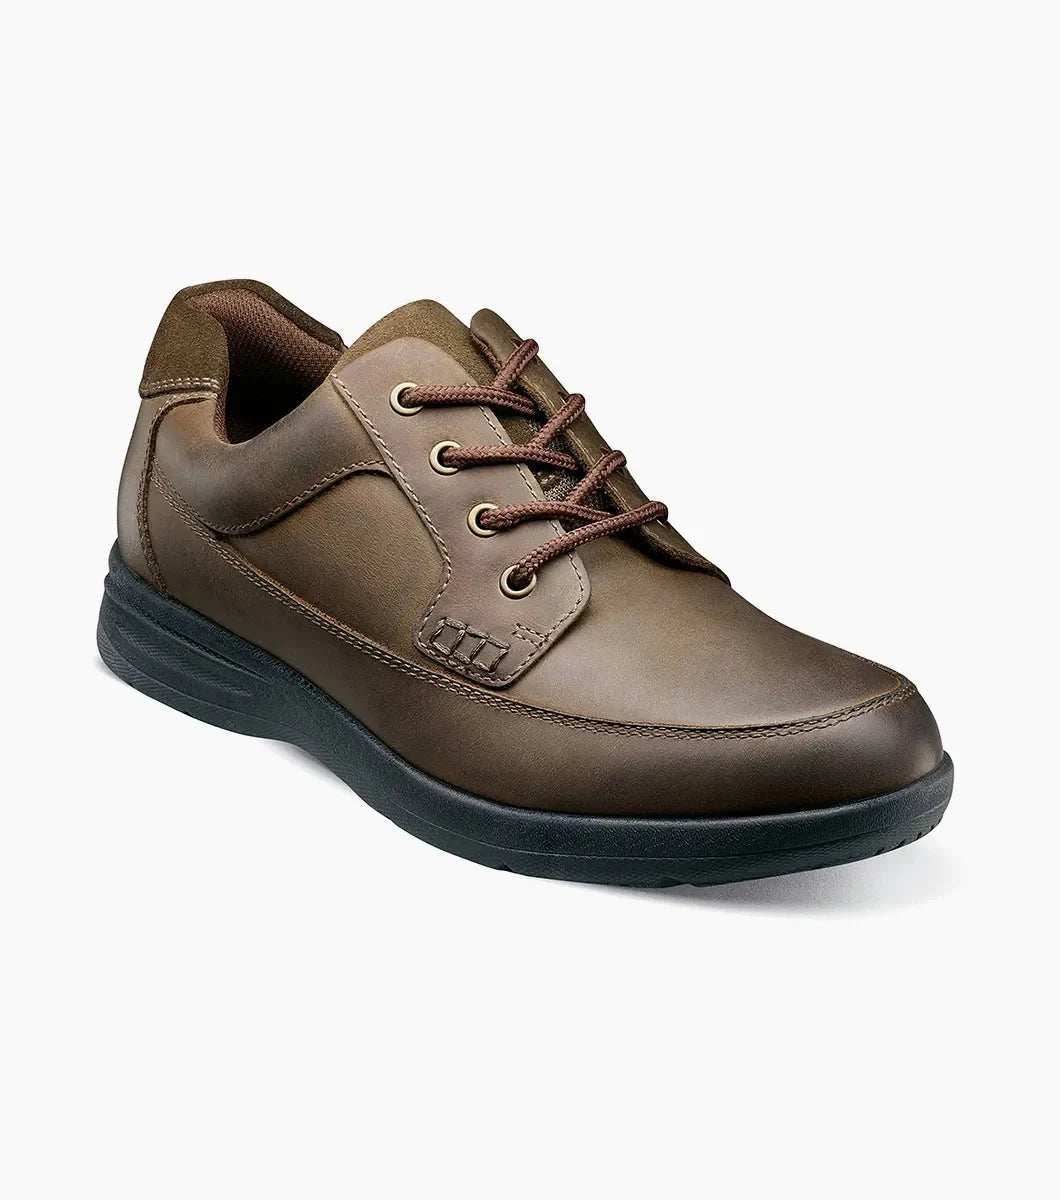 Nunn Bush Men's Cam Moc Toe Oxford Casual Shoes - Brown